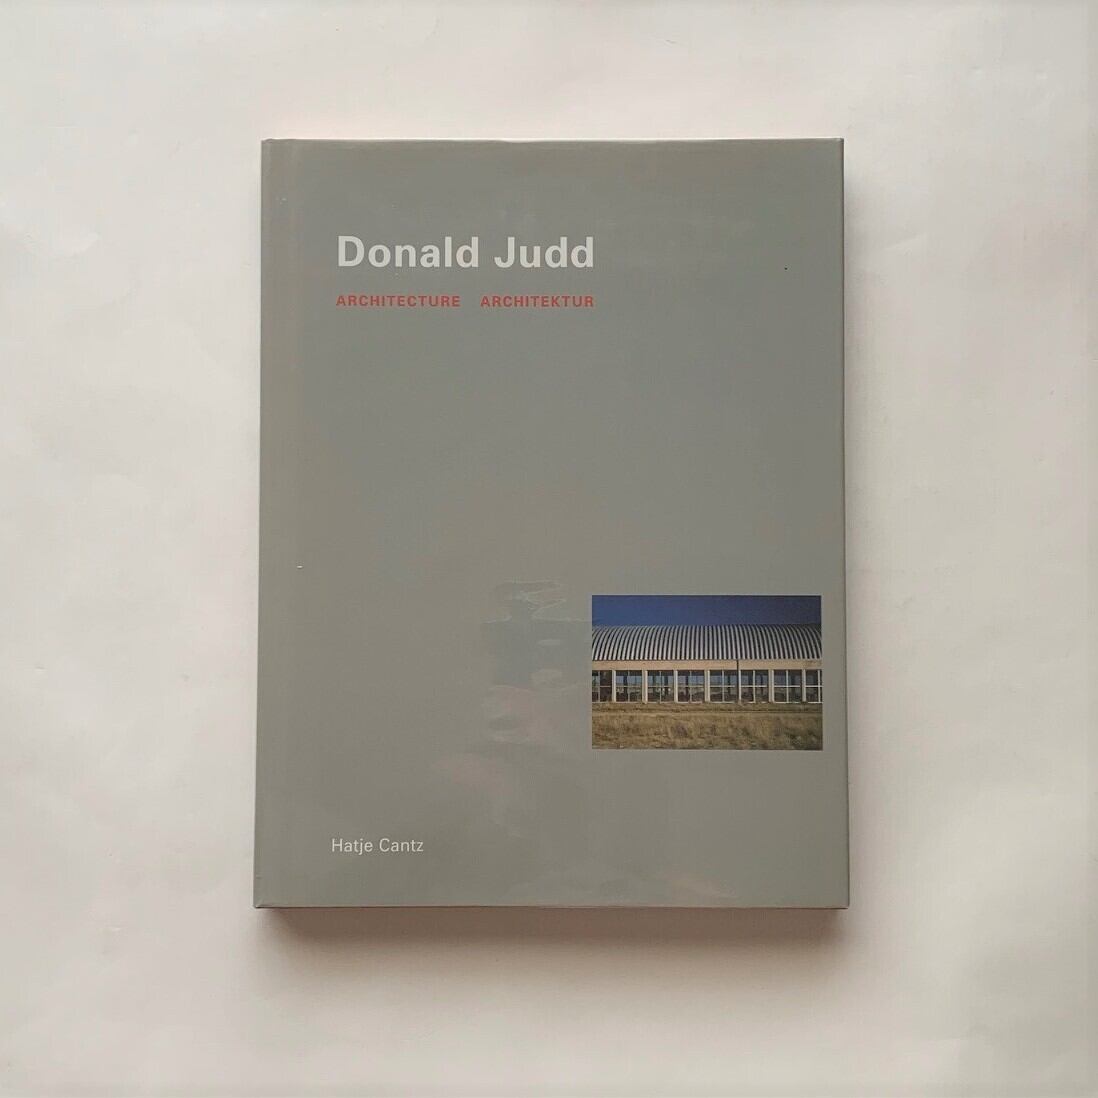 Donald Judd: Architecture Architektur / Donald Judd（ドナルド・ジャッド）